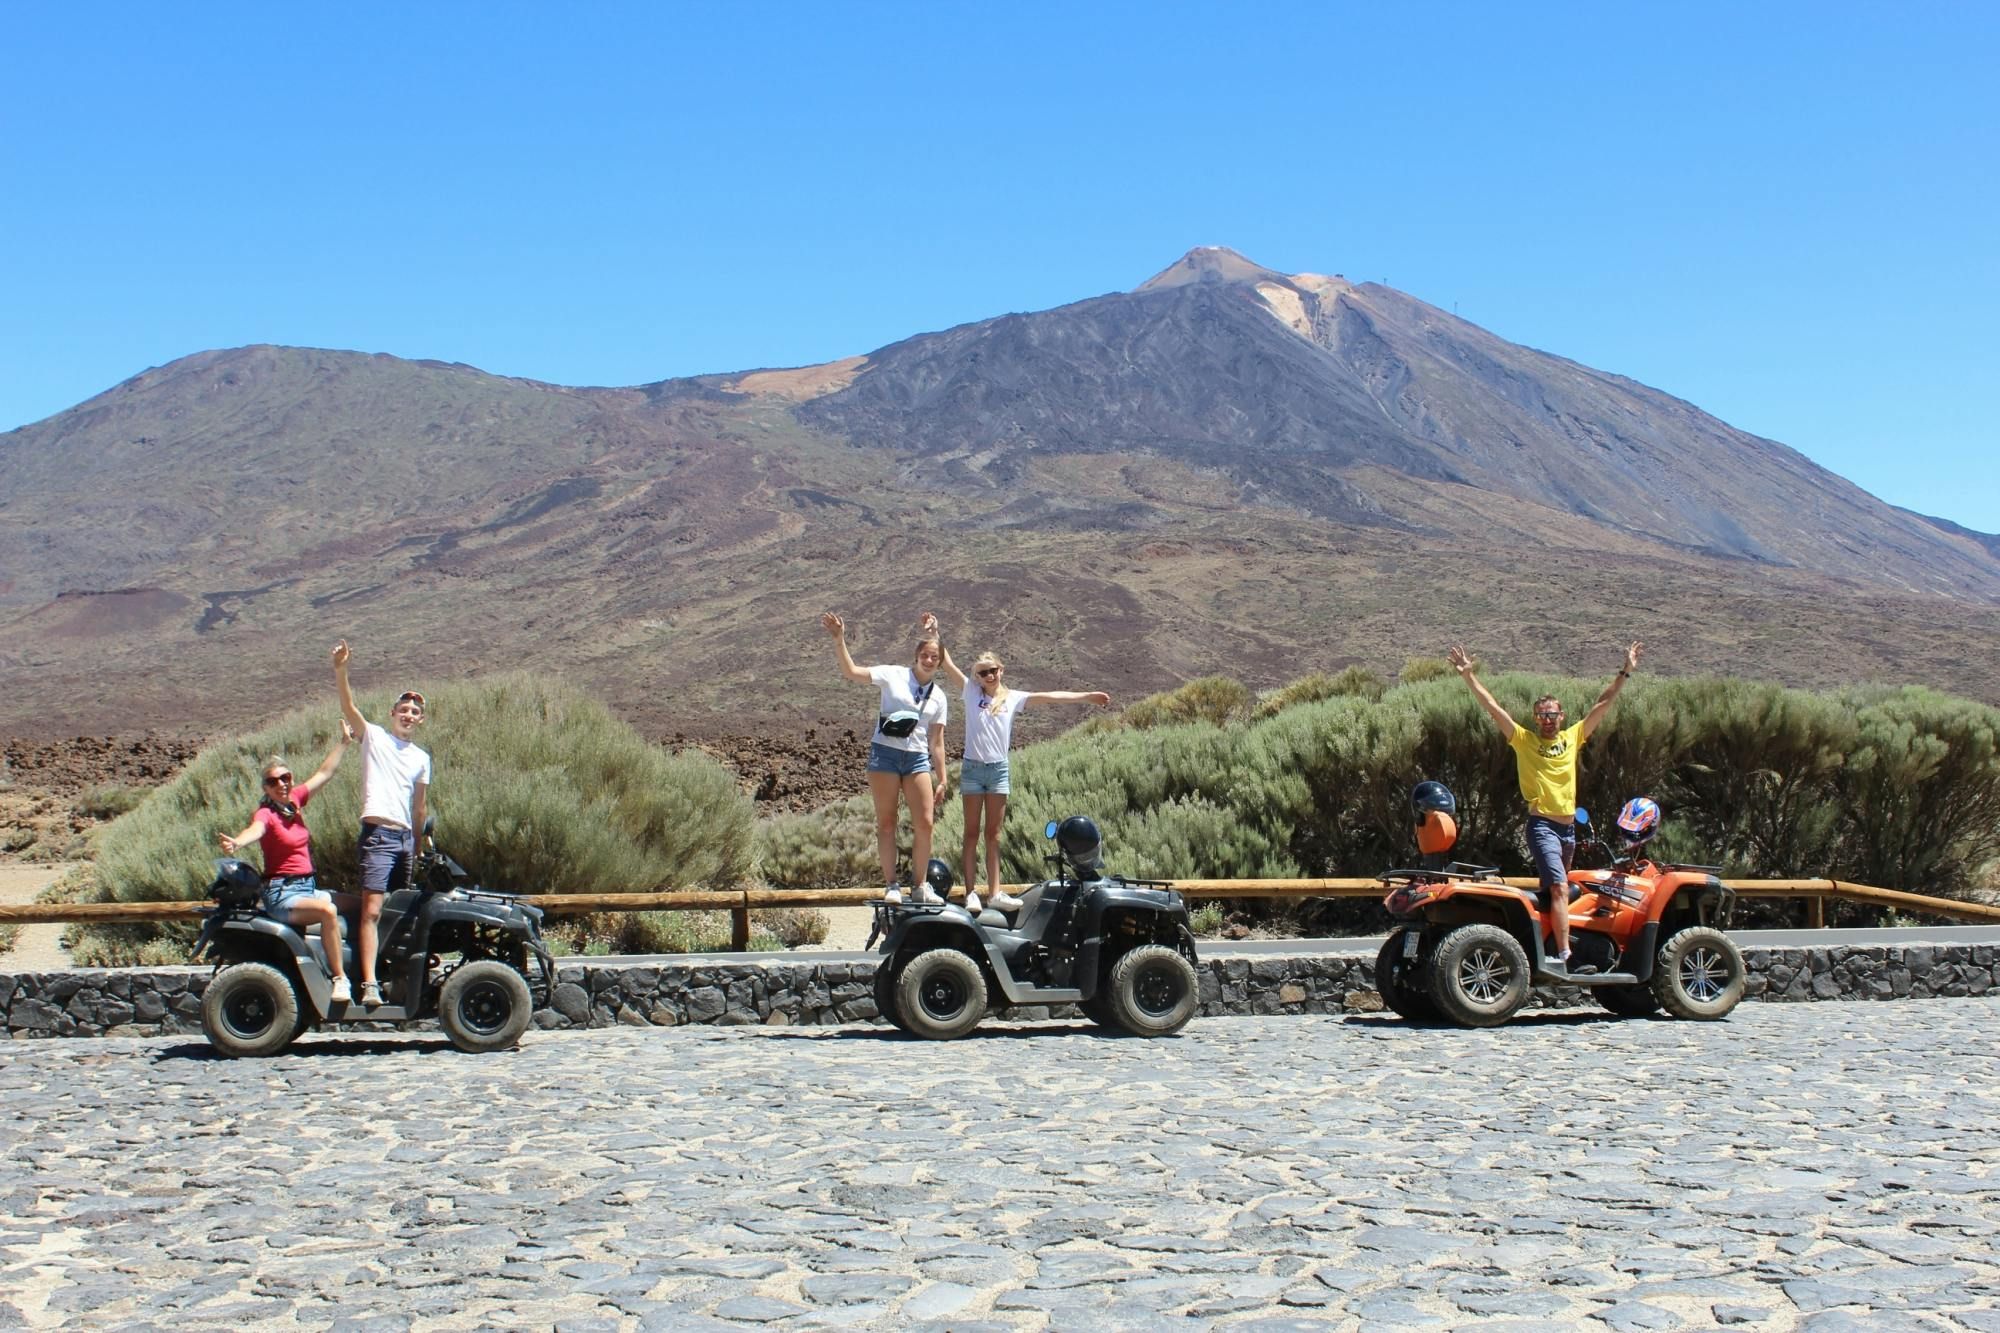 Imagen del tour: Visita guiada en quad al parque nacional del Teide desde la zona A